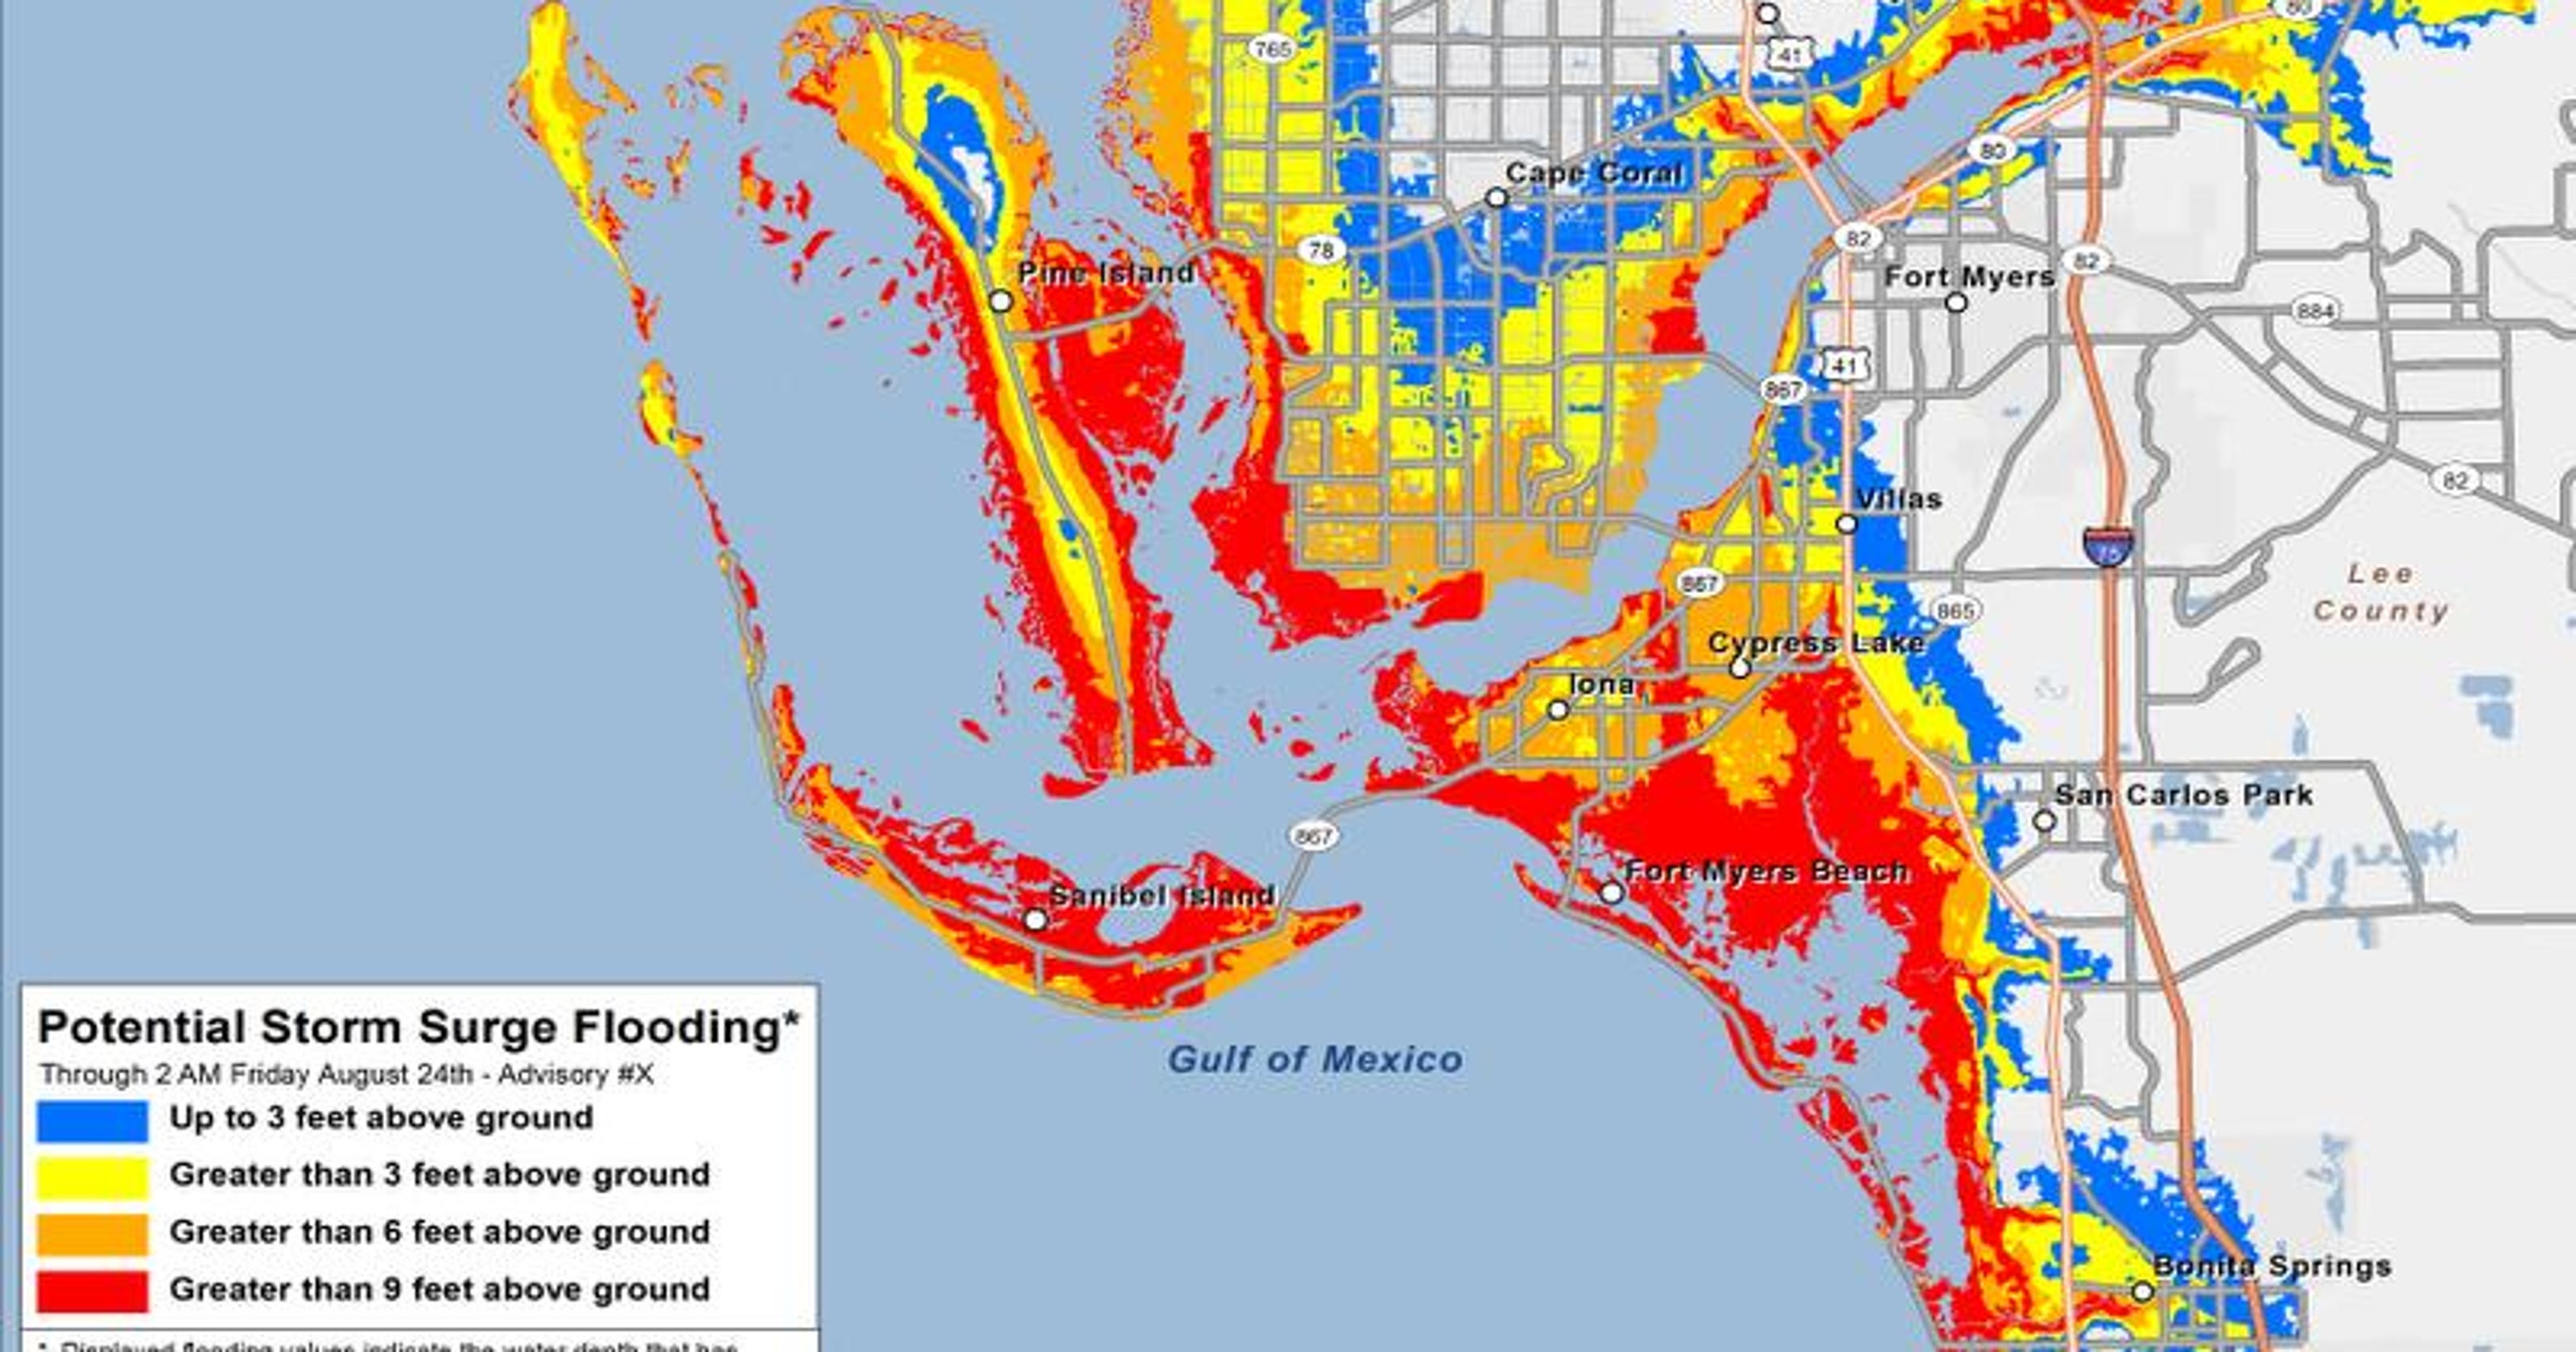 Season’s hurricane maps offer storm surge predictions